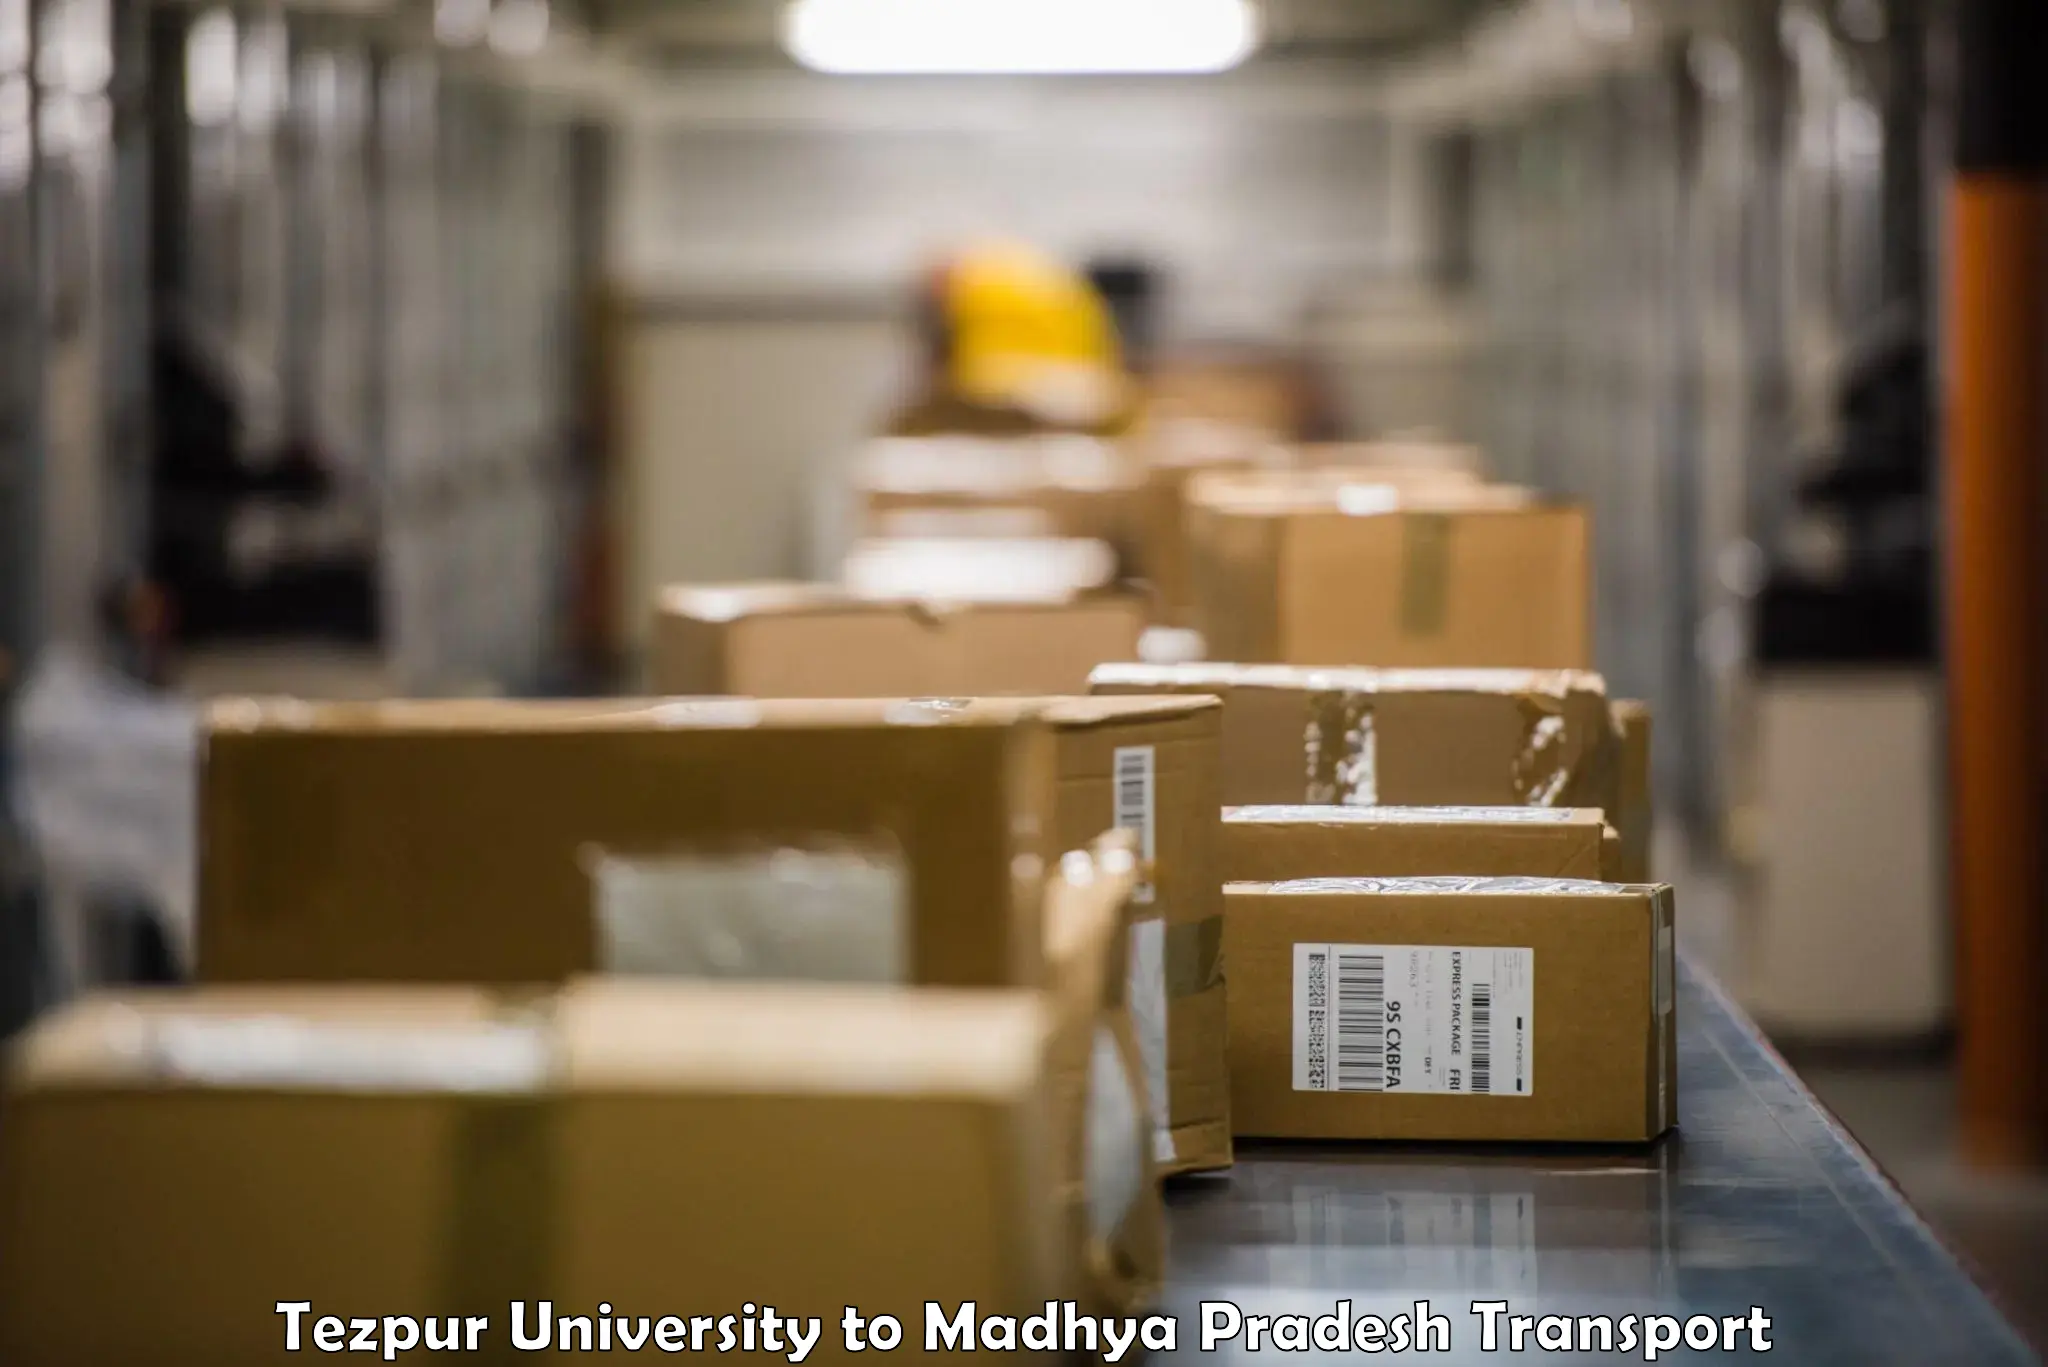 Truck transport companies in India Tezpur University to Chapda